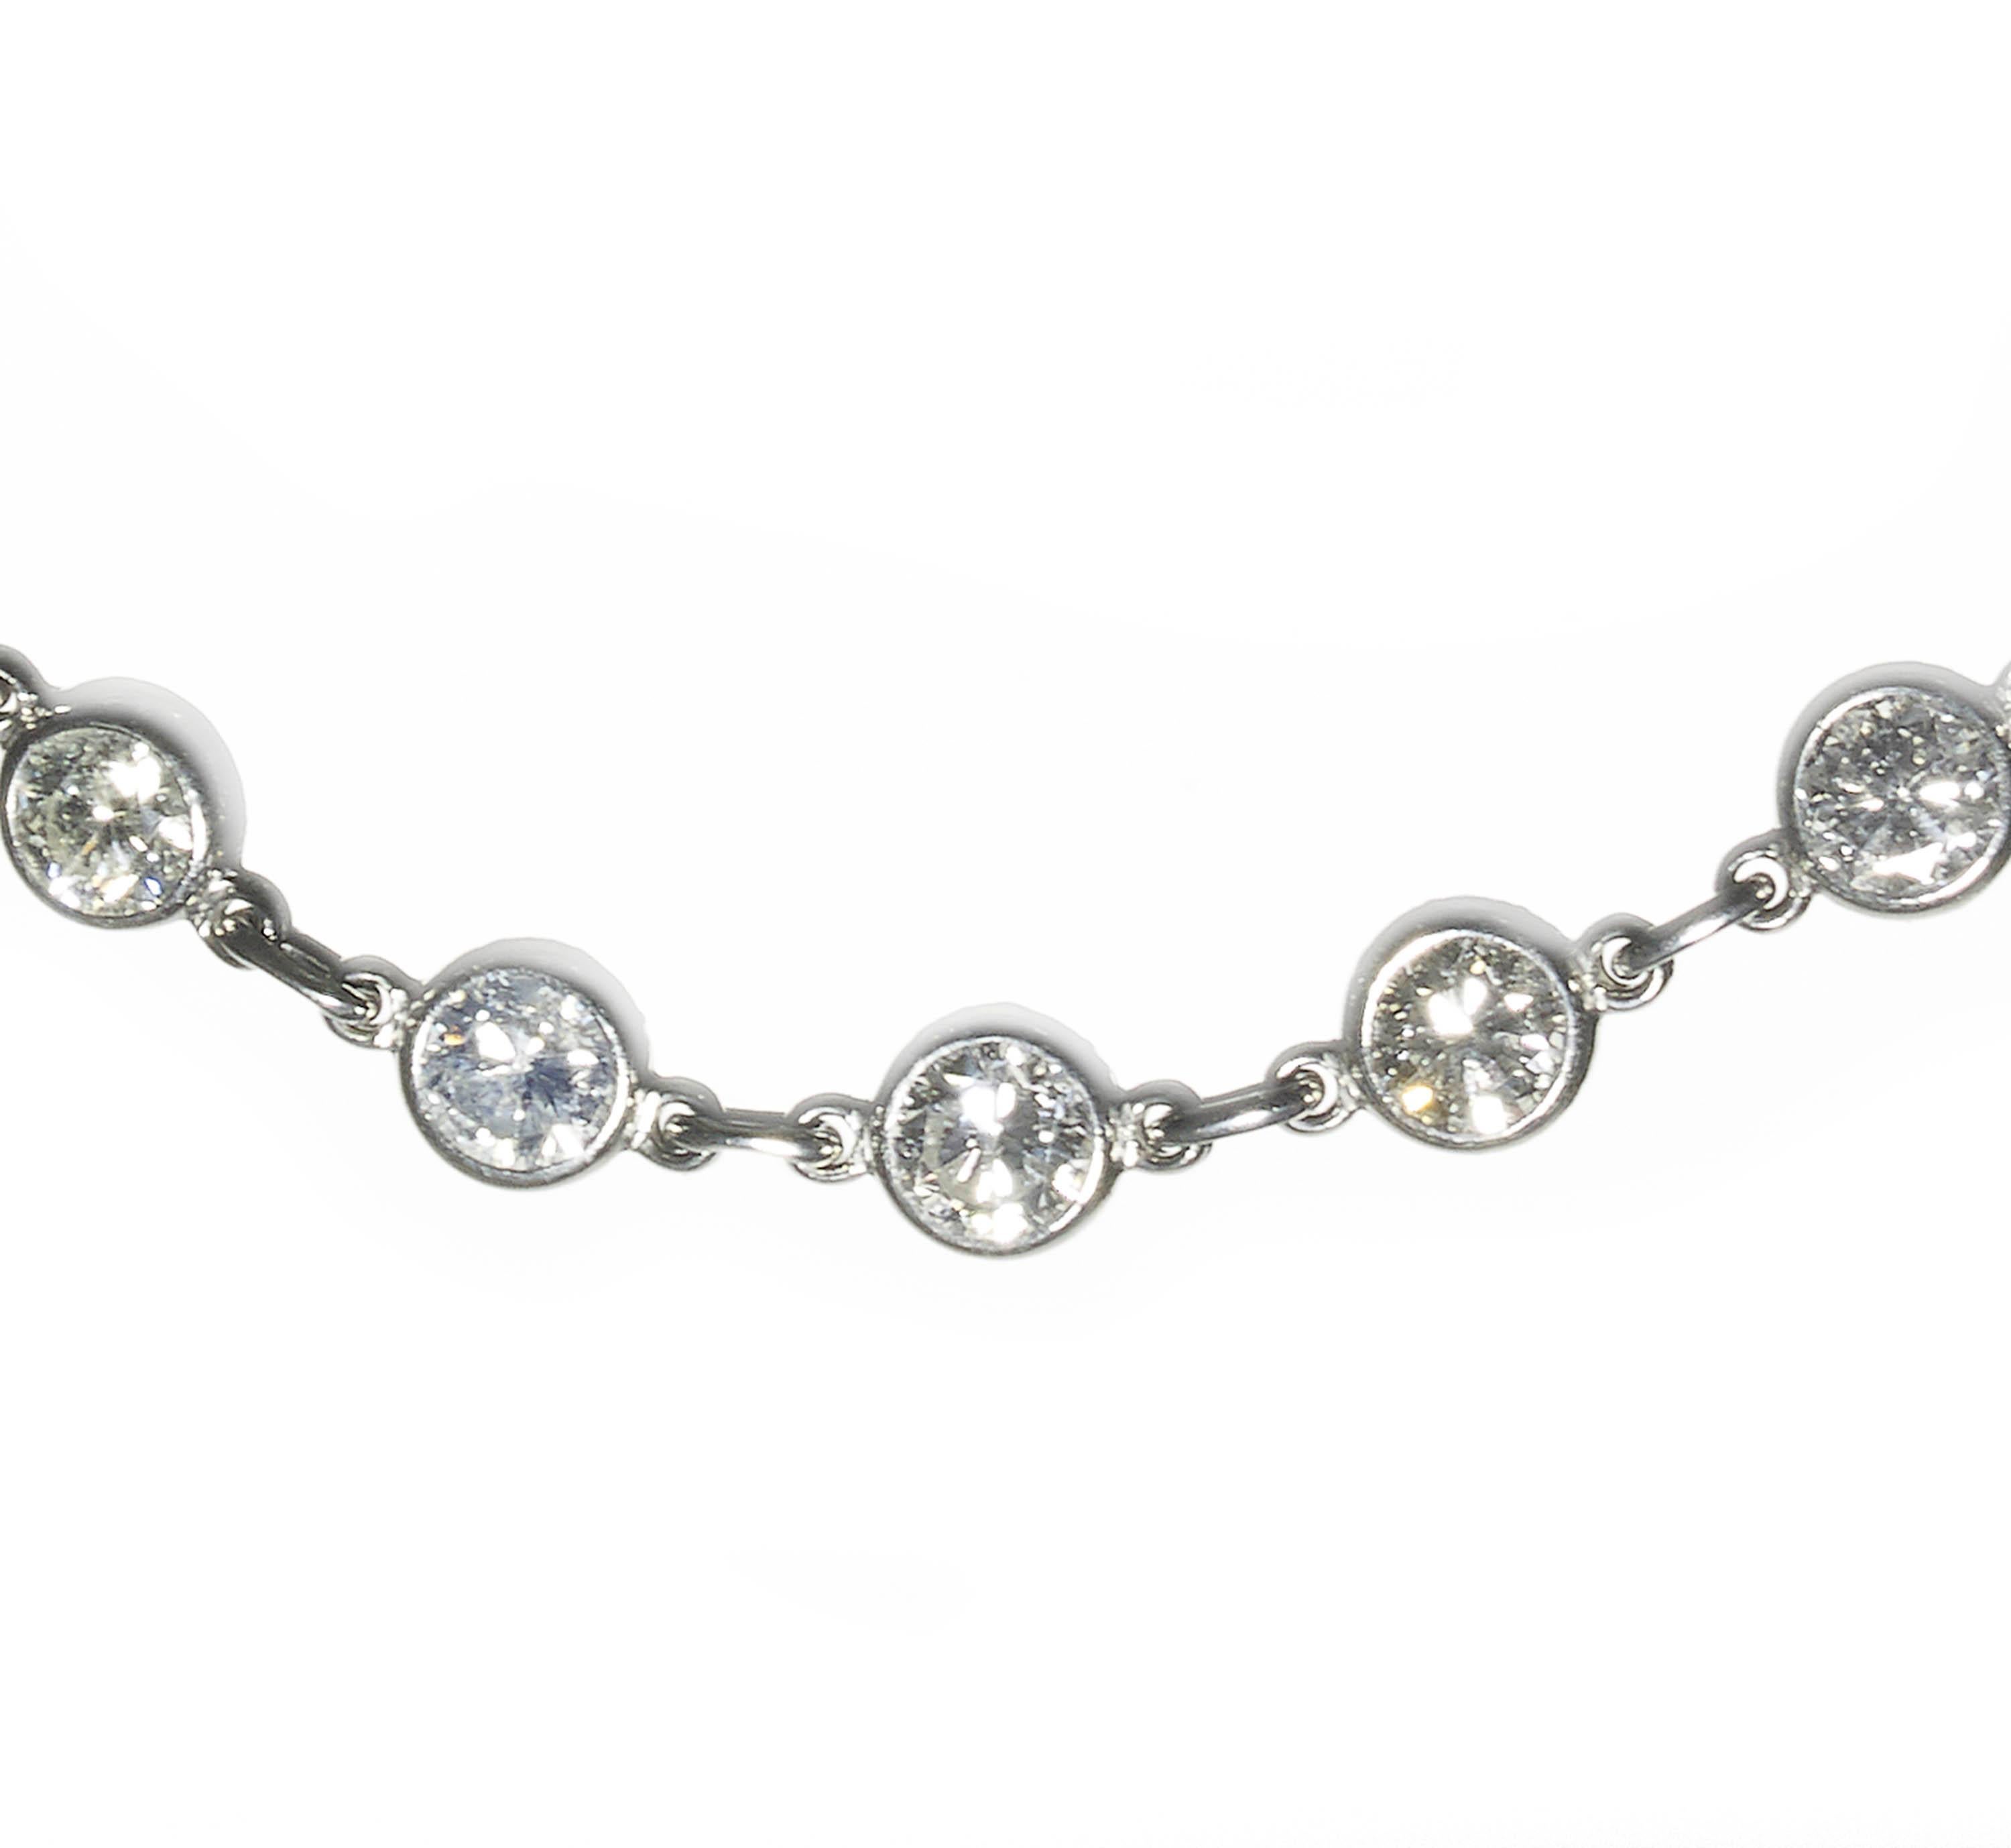 Round Cut Modern Diamond and Platinum Chain Necklace, 7.77 Carat